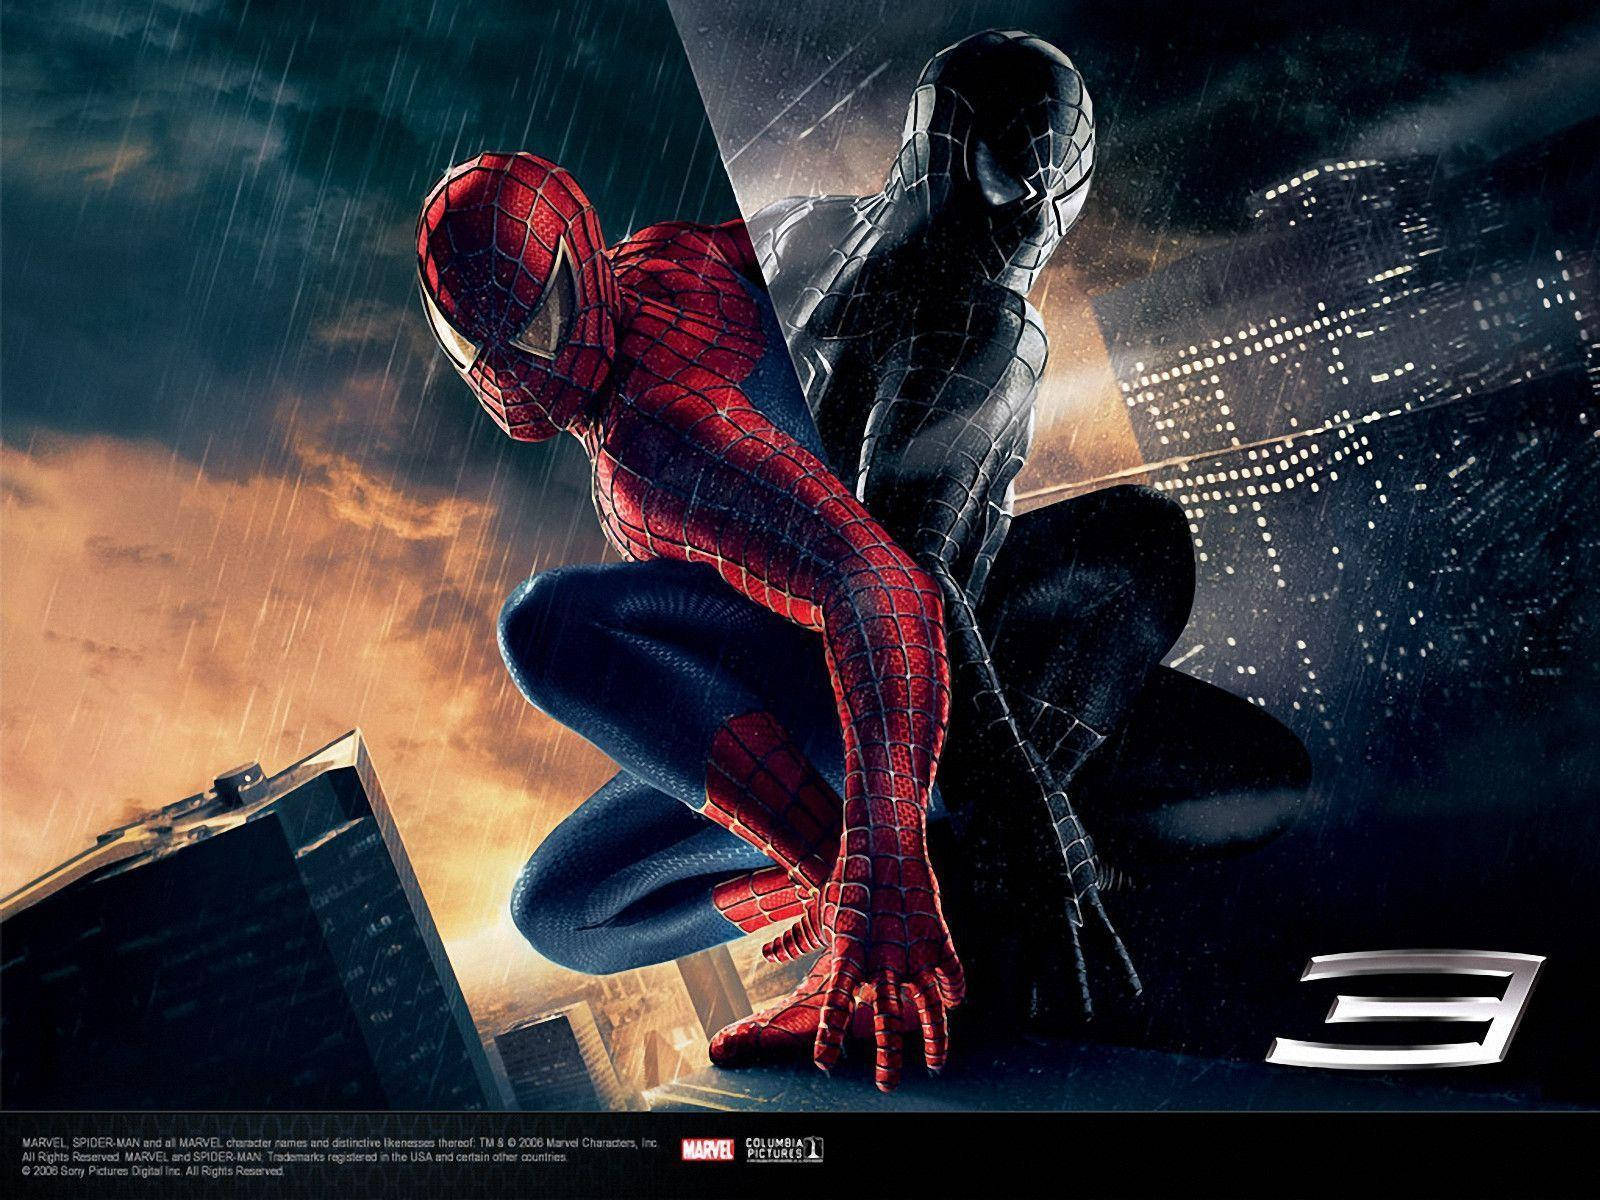 Download Spiderman Wallpaper